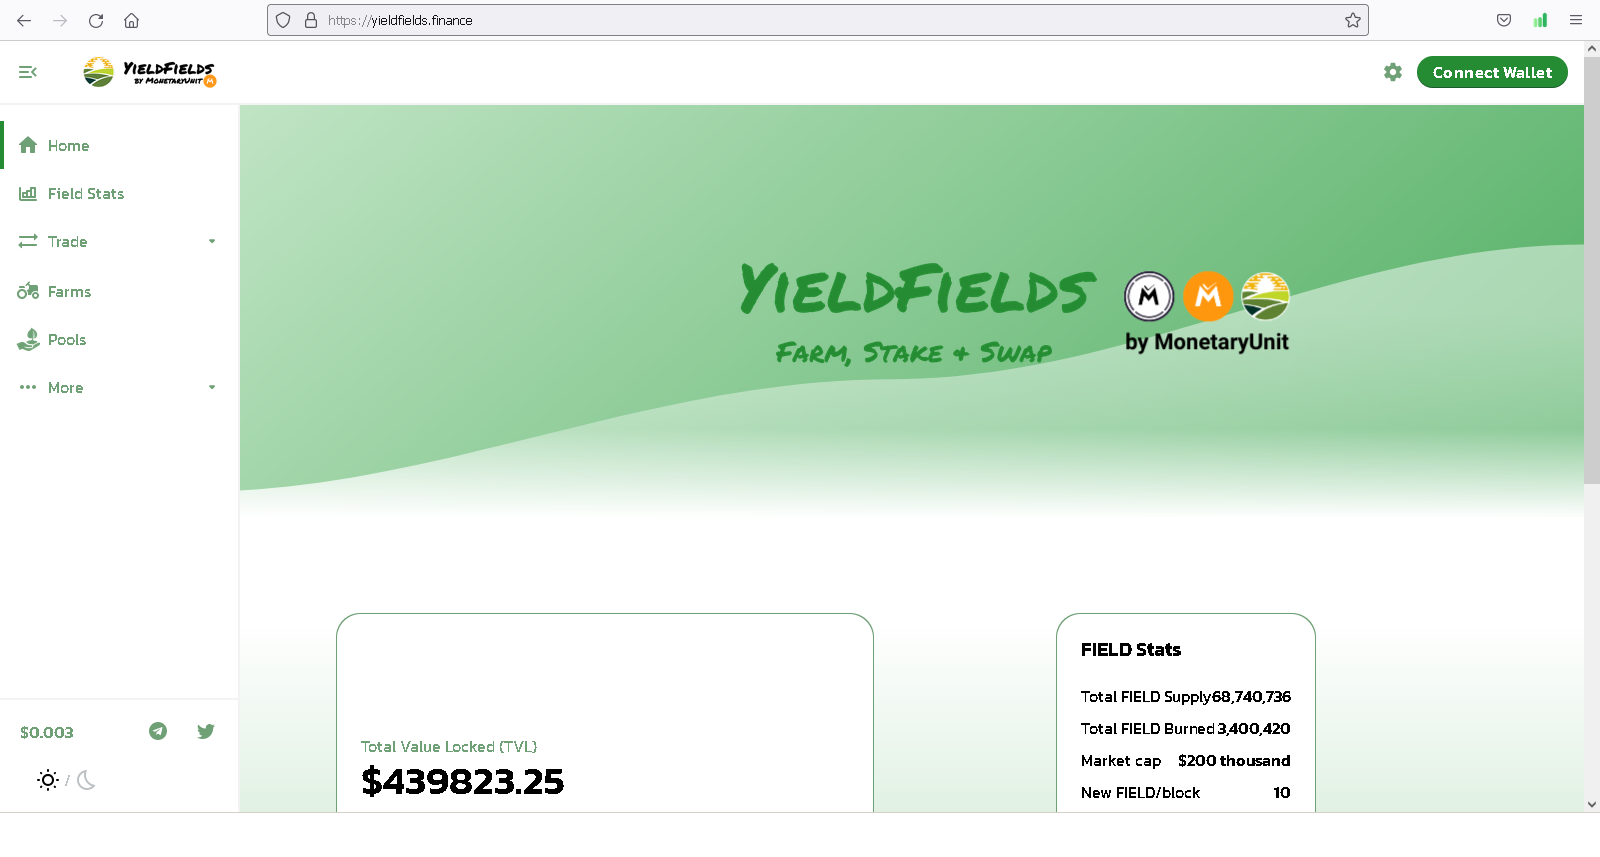 yieldfields